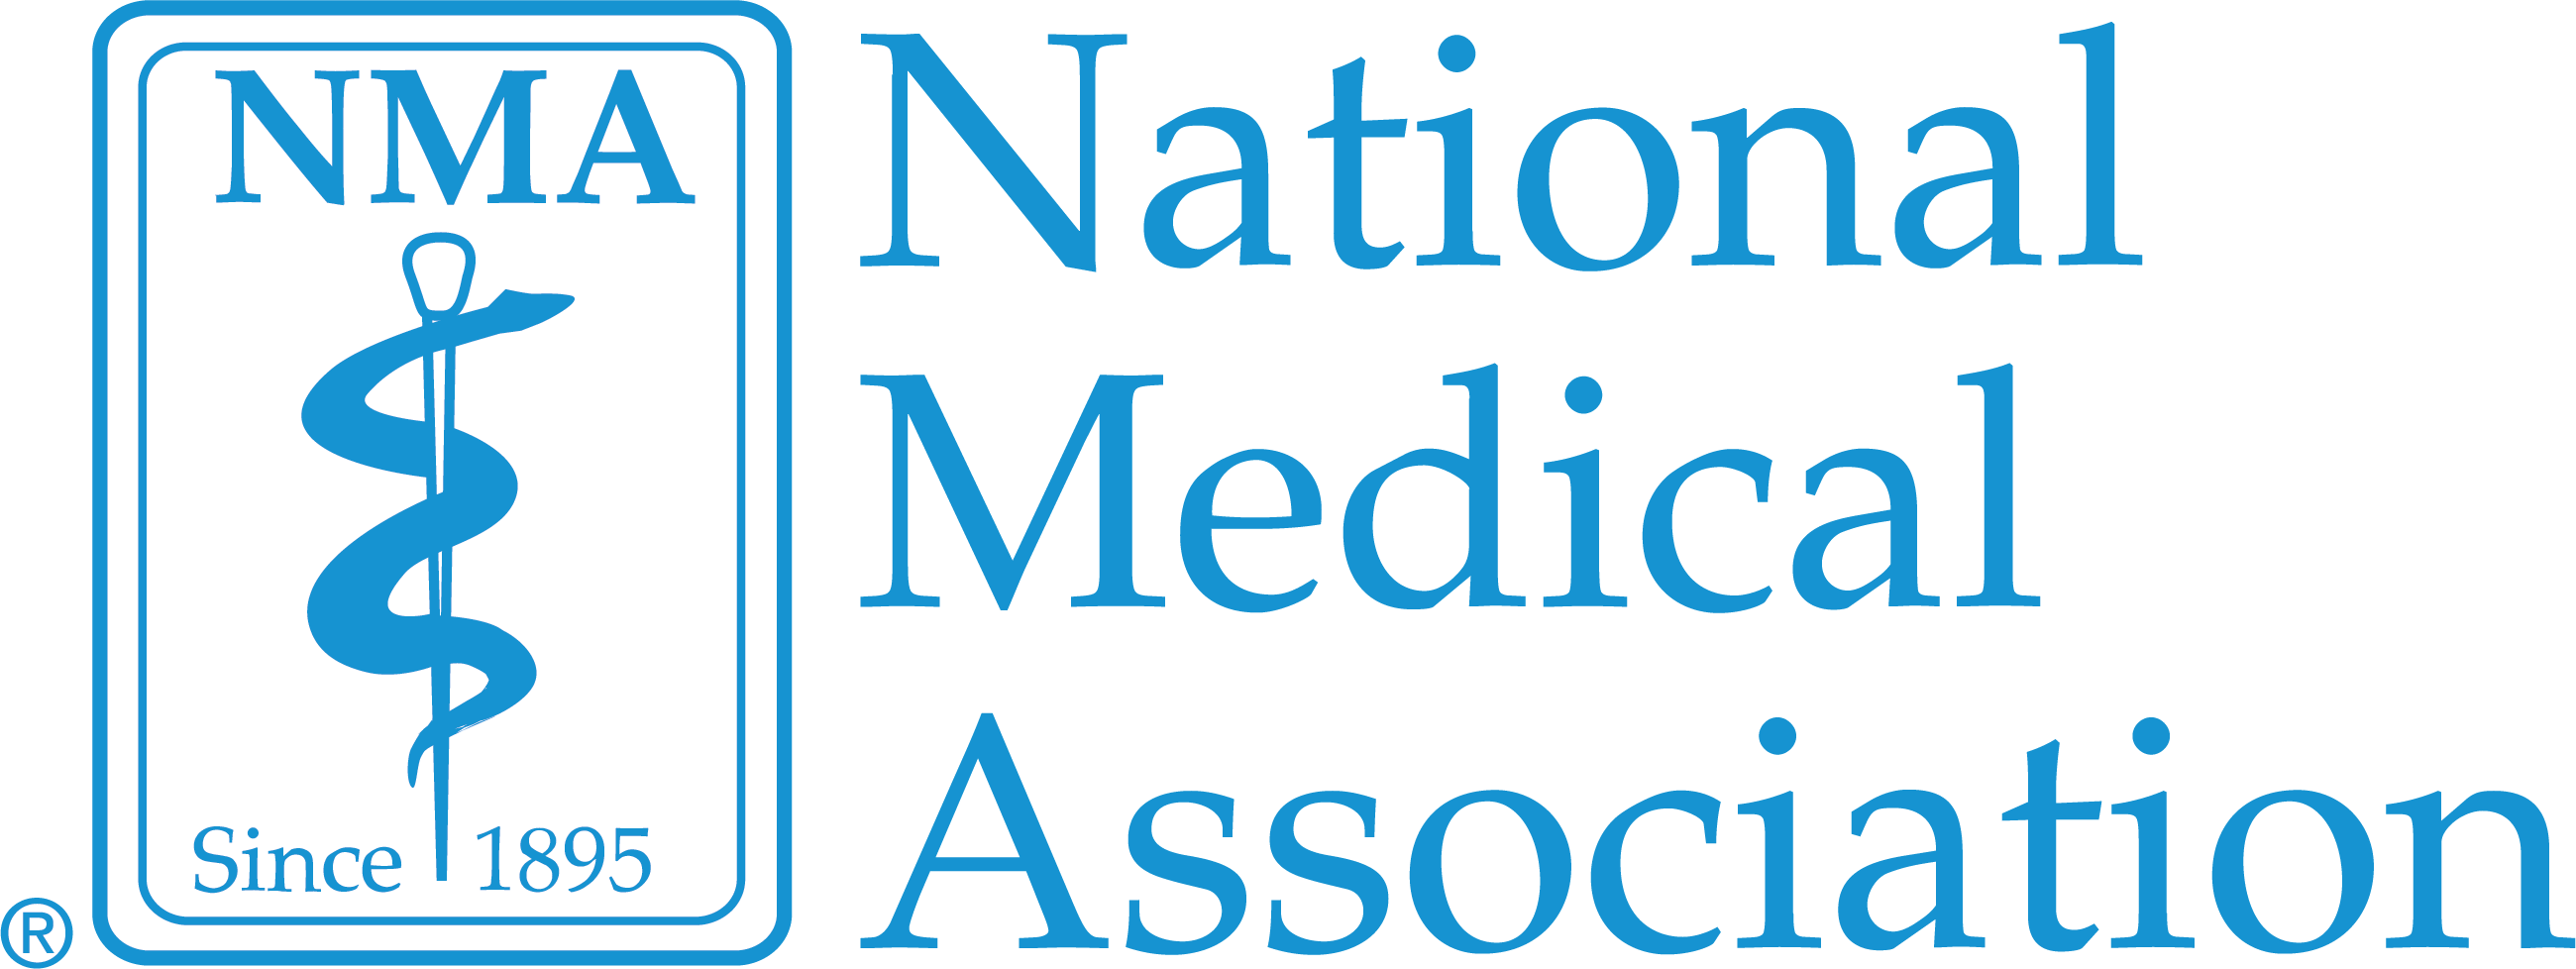 National Medical Association, Inc